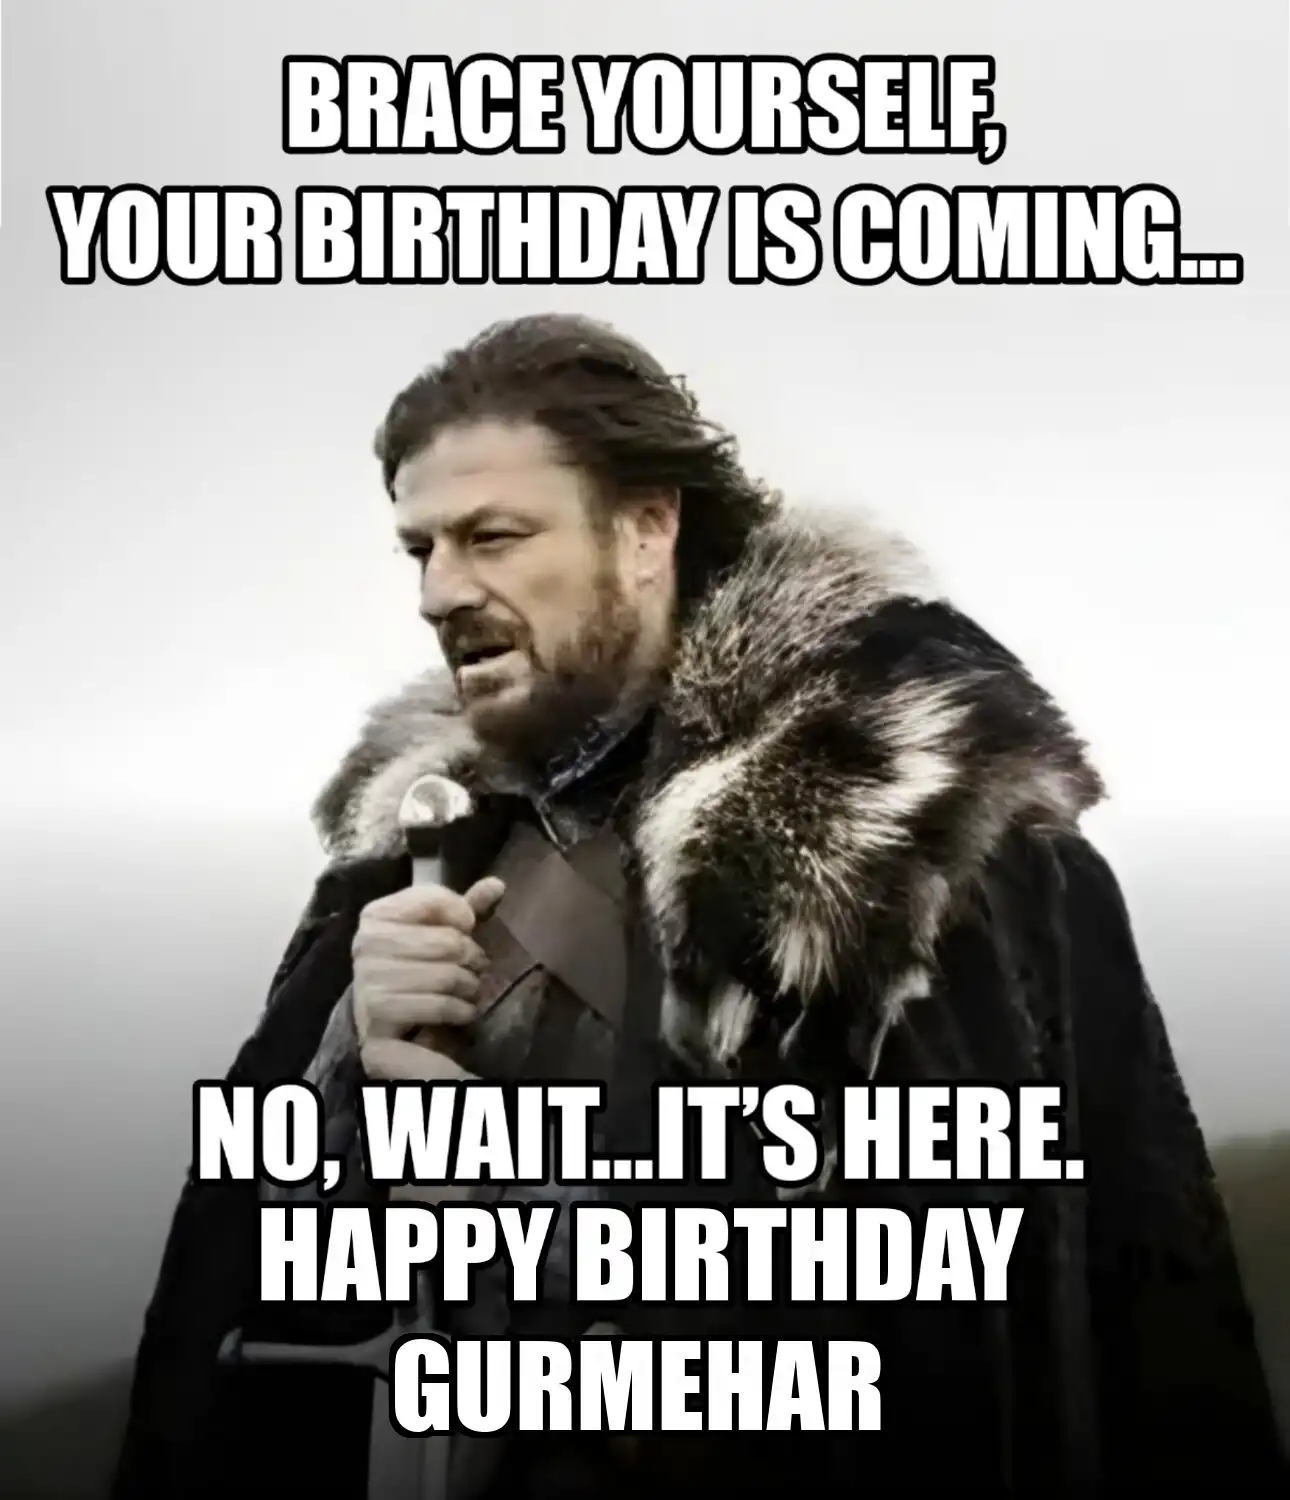 Happy Birthday Gurmehar Brace Yourself Your Birthday Is Coming Meme